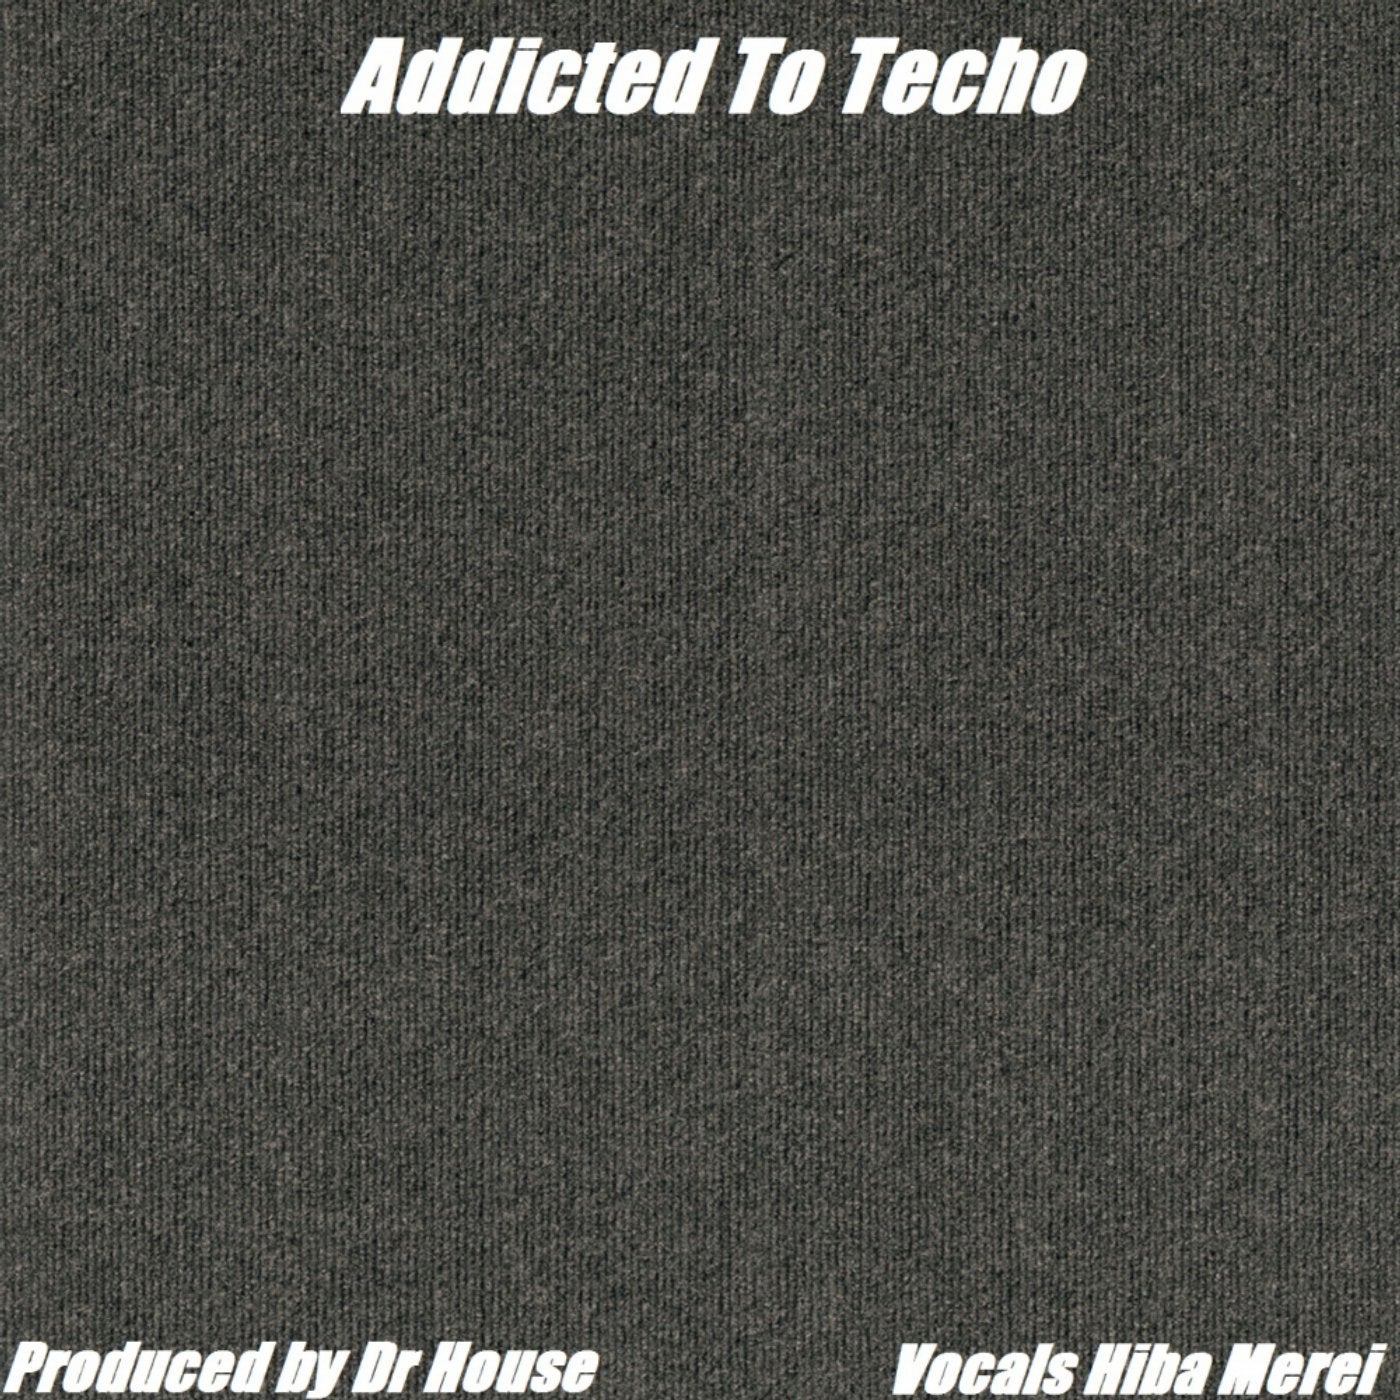 Addicted To Techno